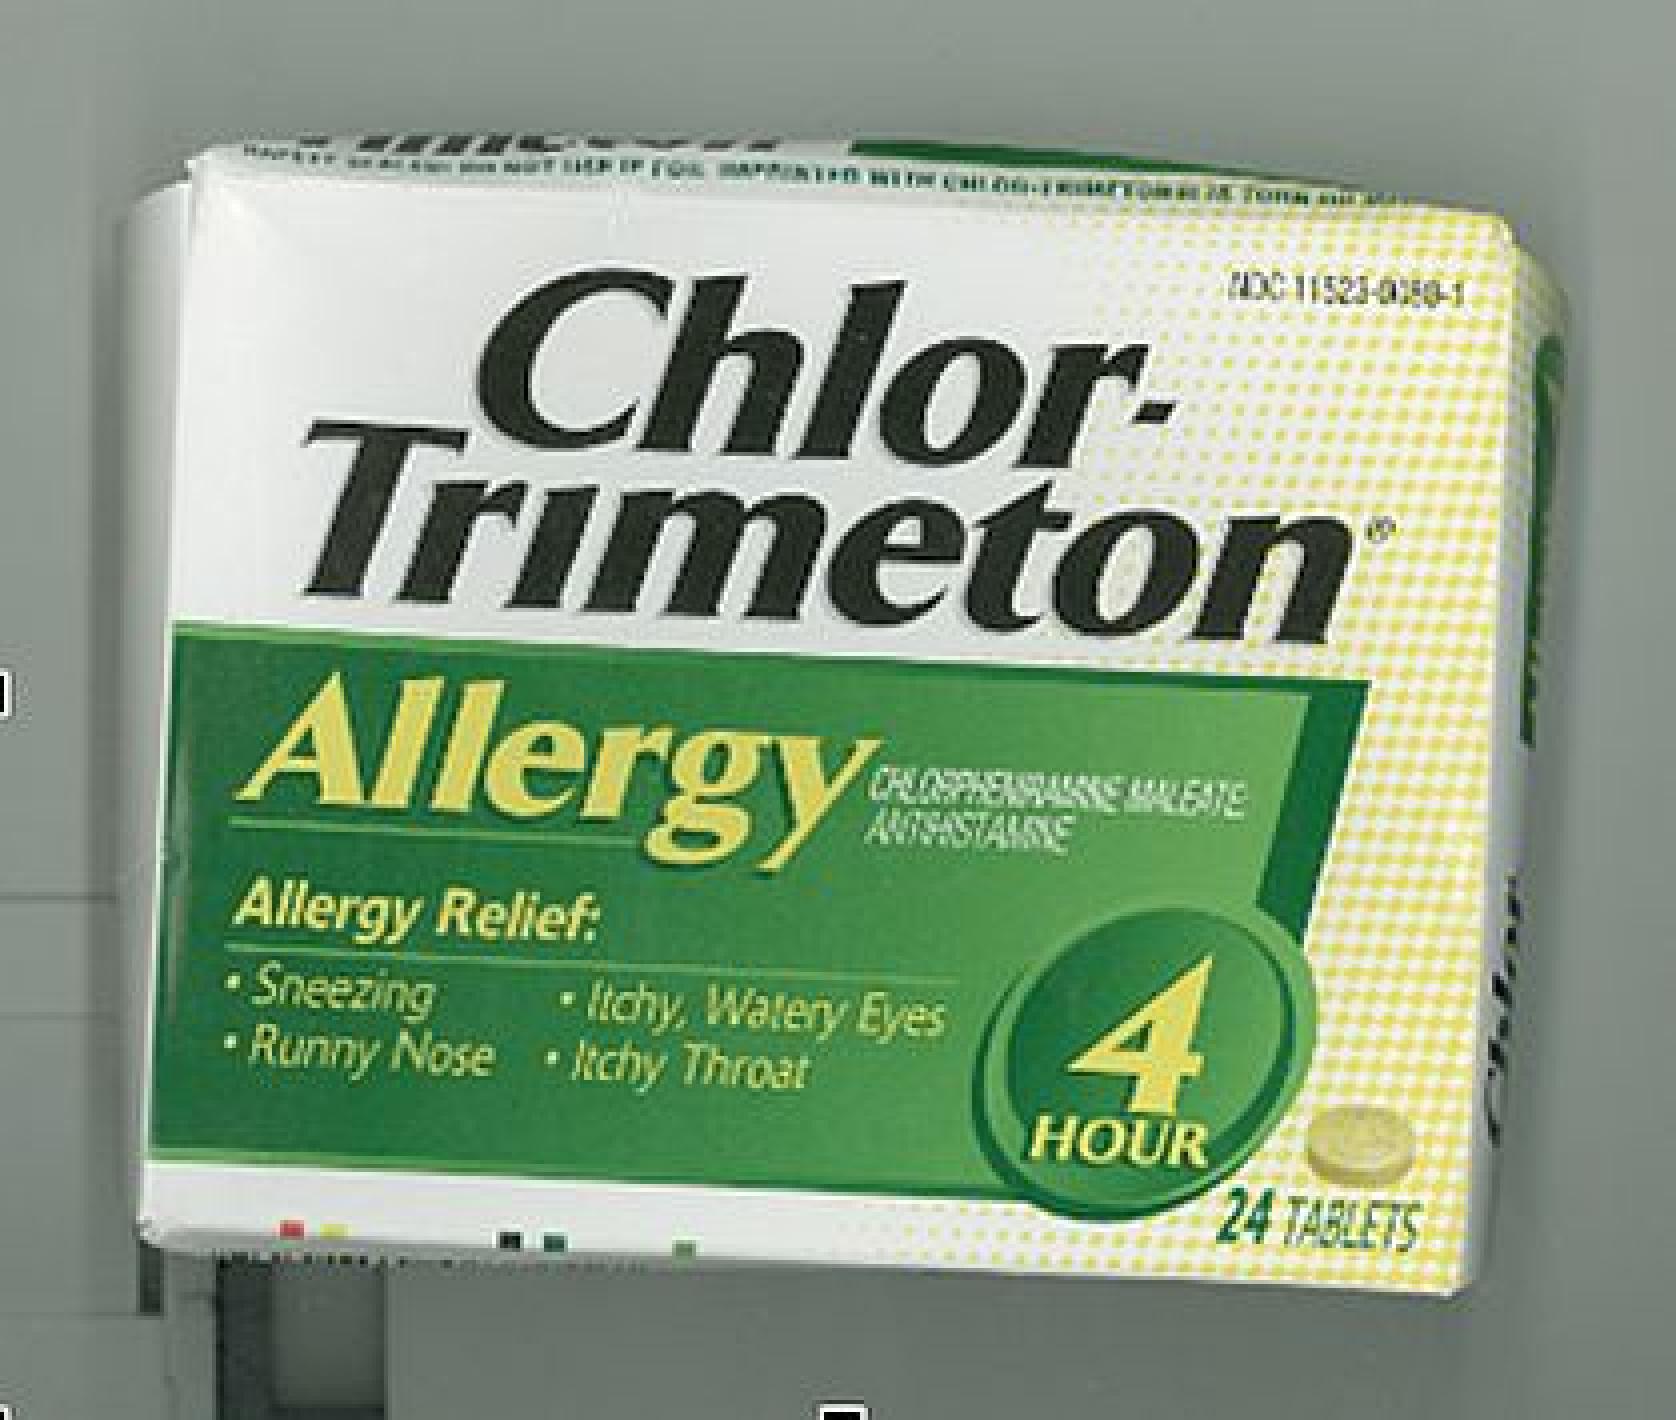 CHLOR-TRIMETON